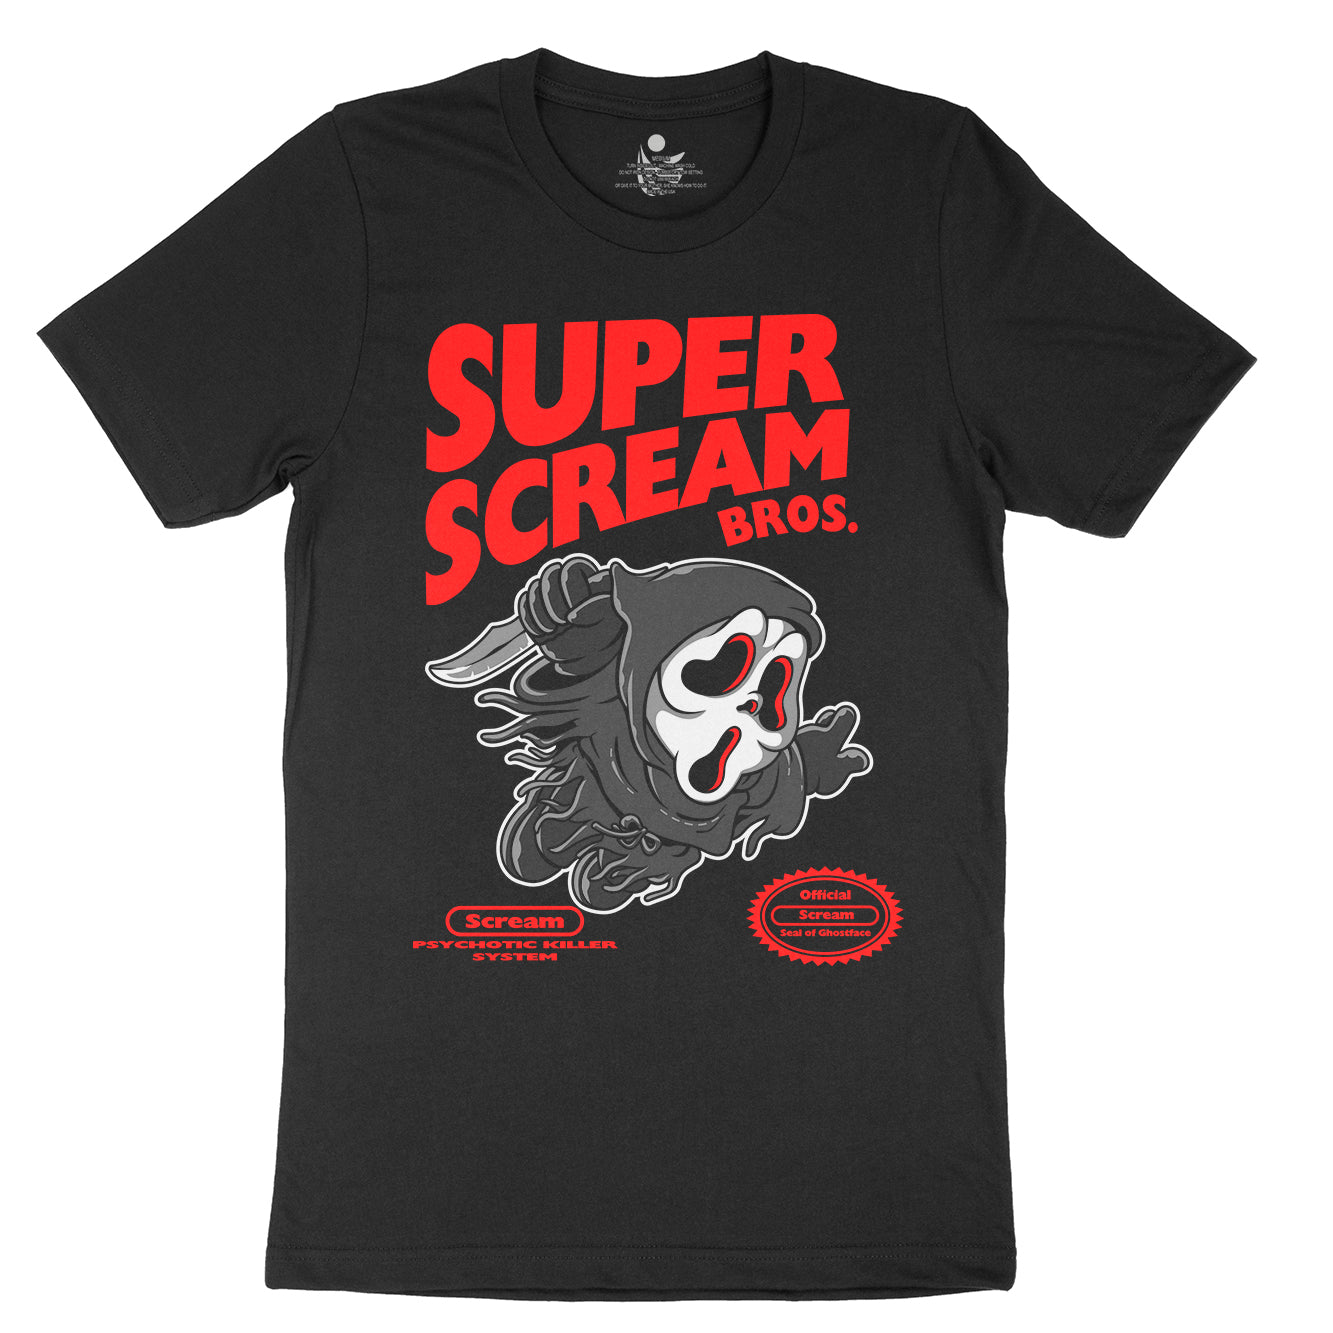 Super Scream